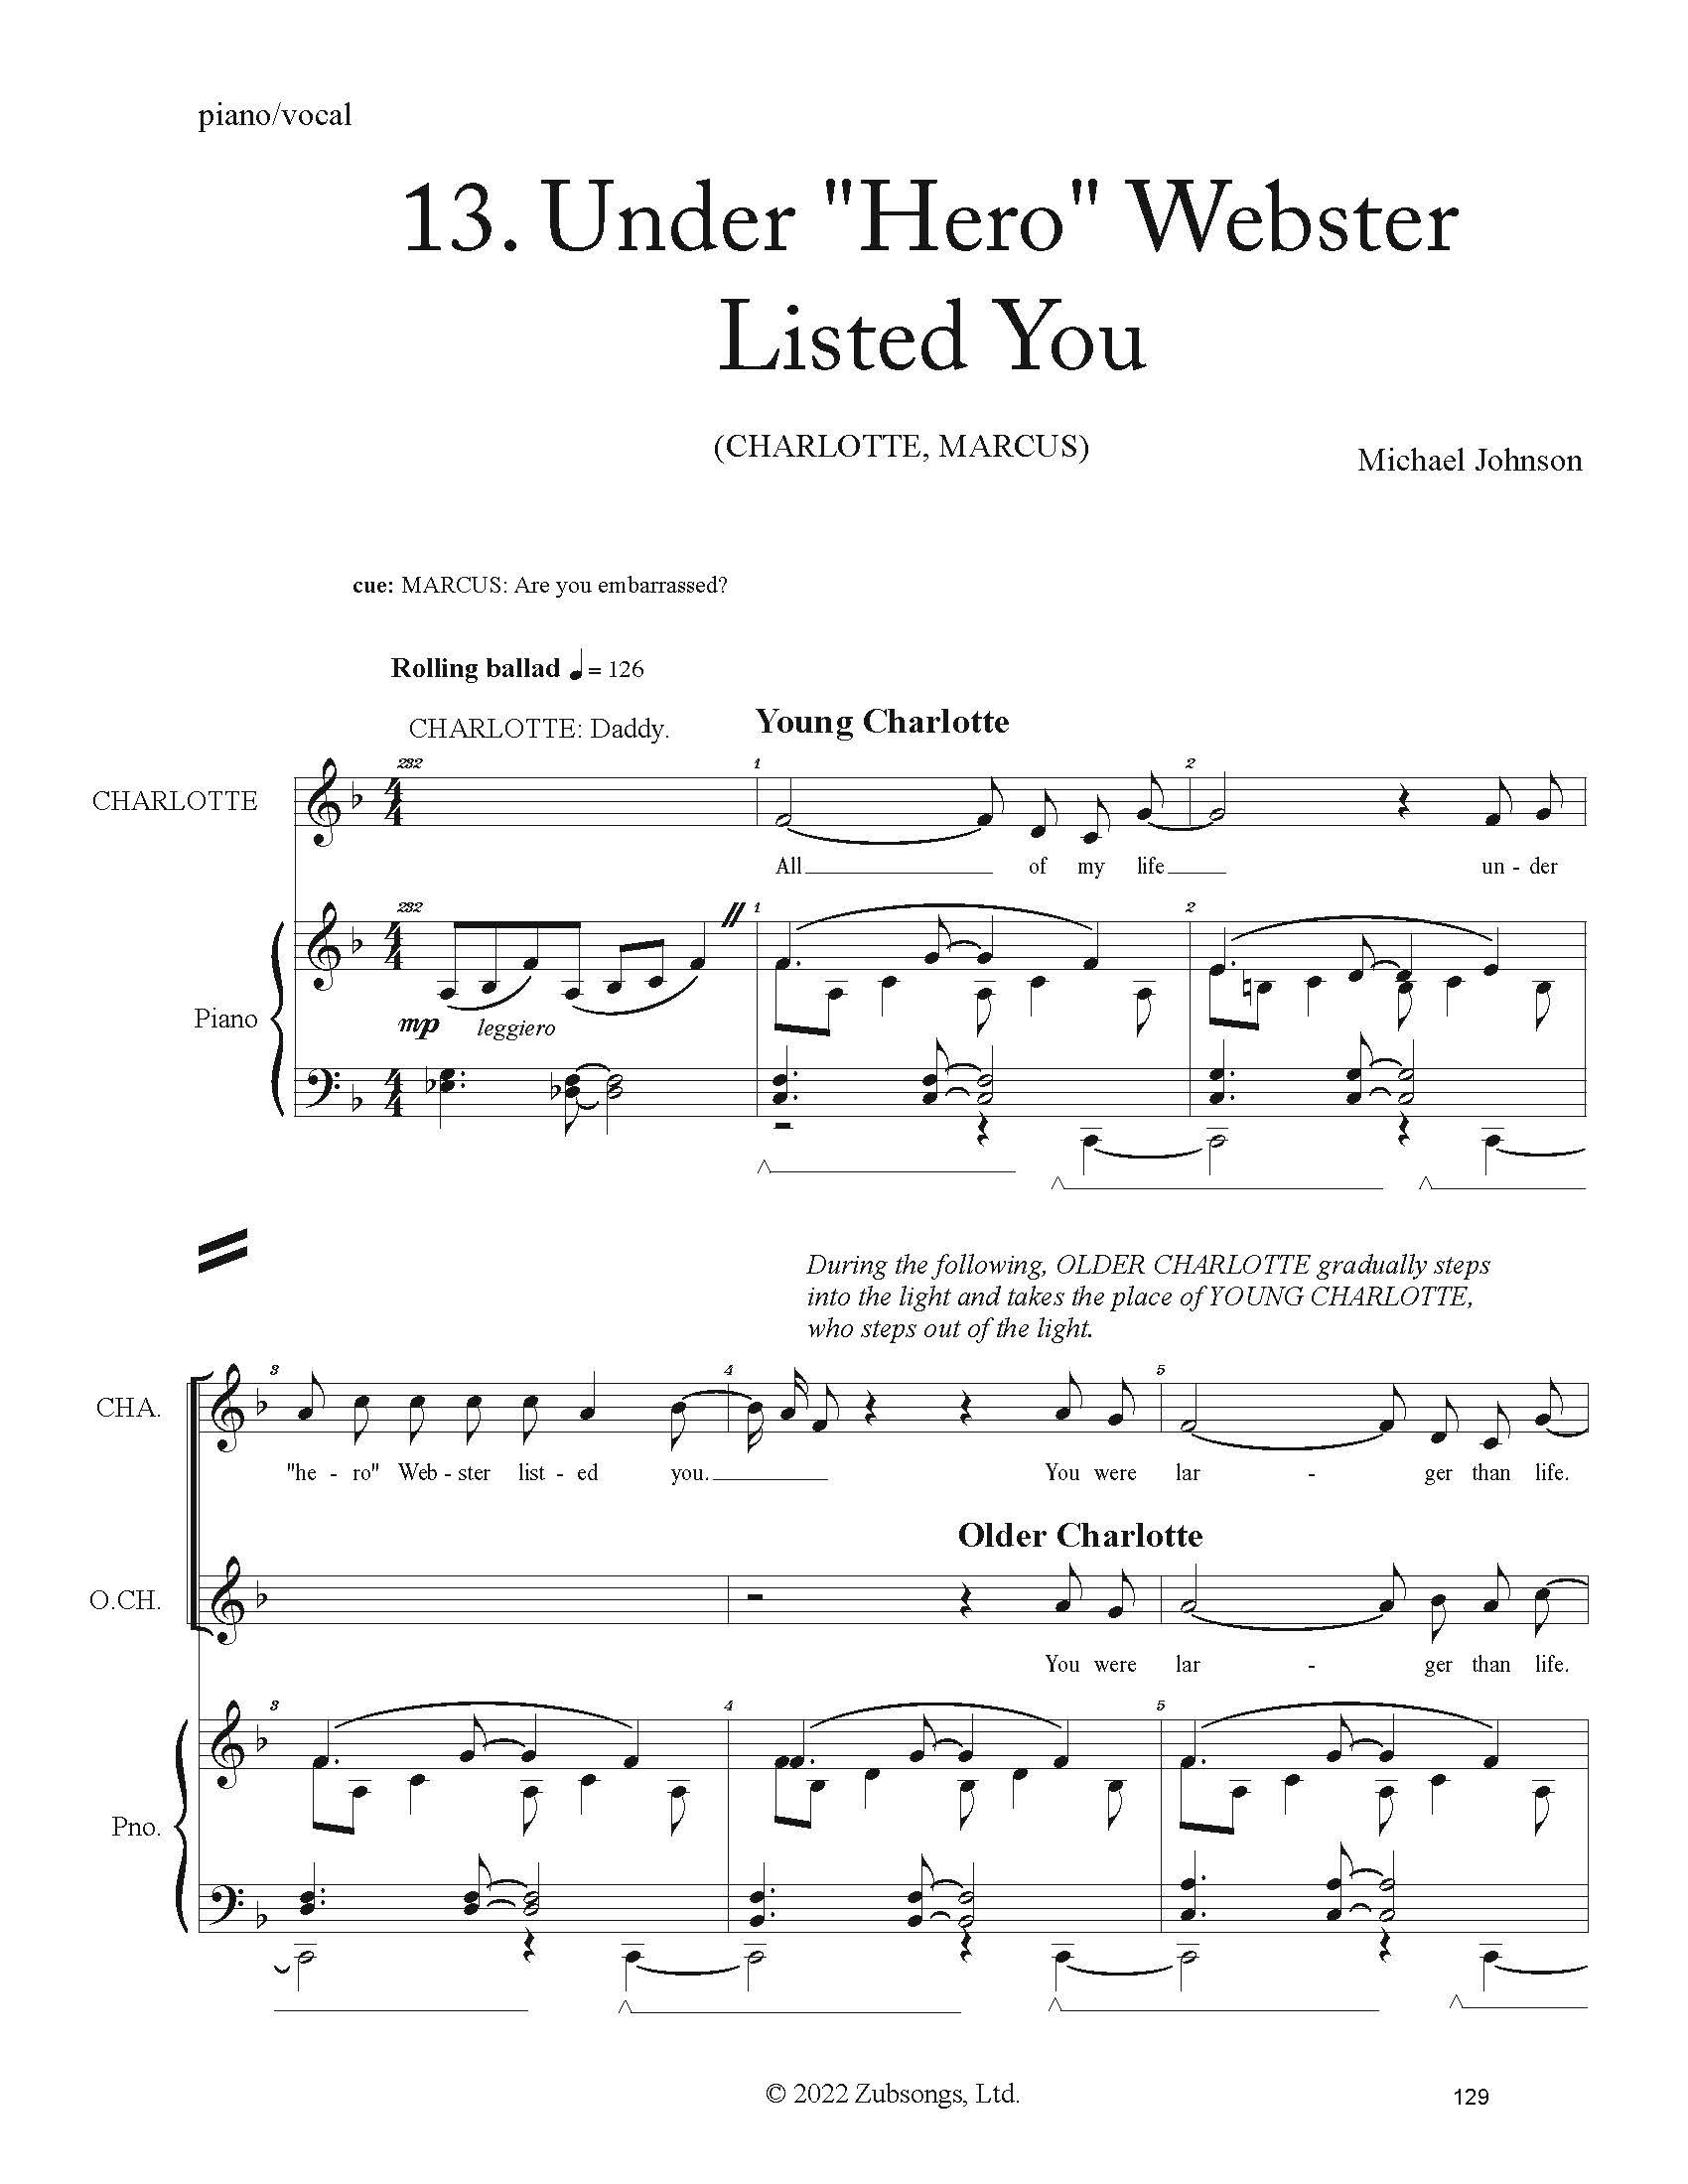 FULL PIANO VOCAL SCORE DRAFT 1 - Score_Page_129.jpg